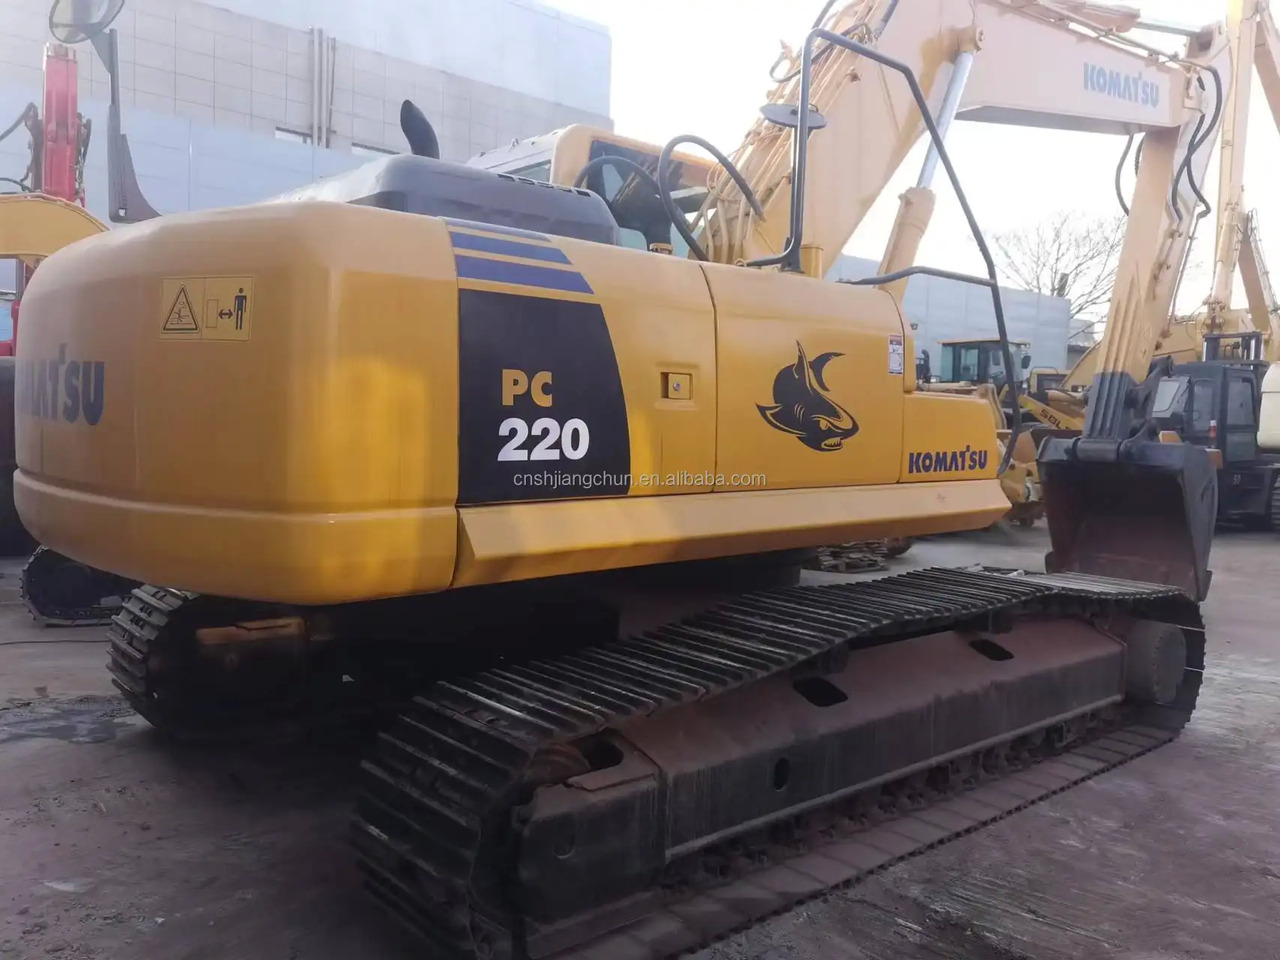 Crawler excavator japan used price new komatsu pc220-8 pc220-7 pc210 pc200-8 crawler excavator for sale parameter configuration: picture 6